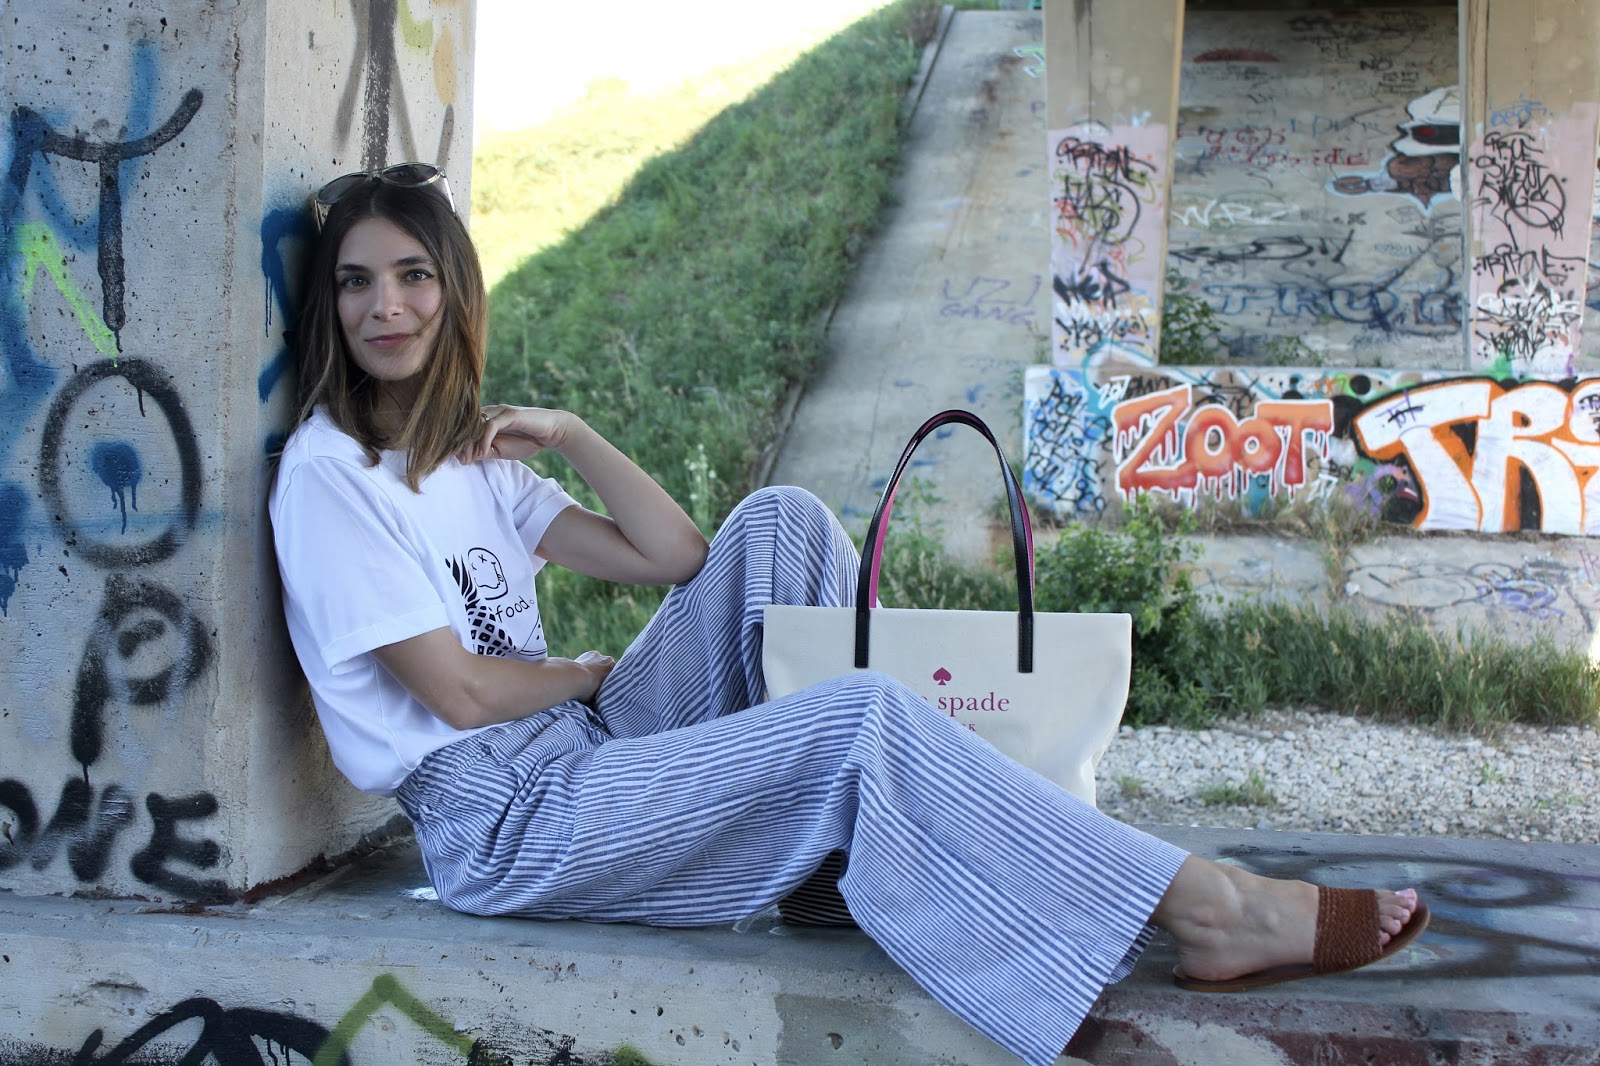 What She Wore Allesandra Ambrosio In Graffiti Print Skinny Jeans